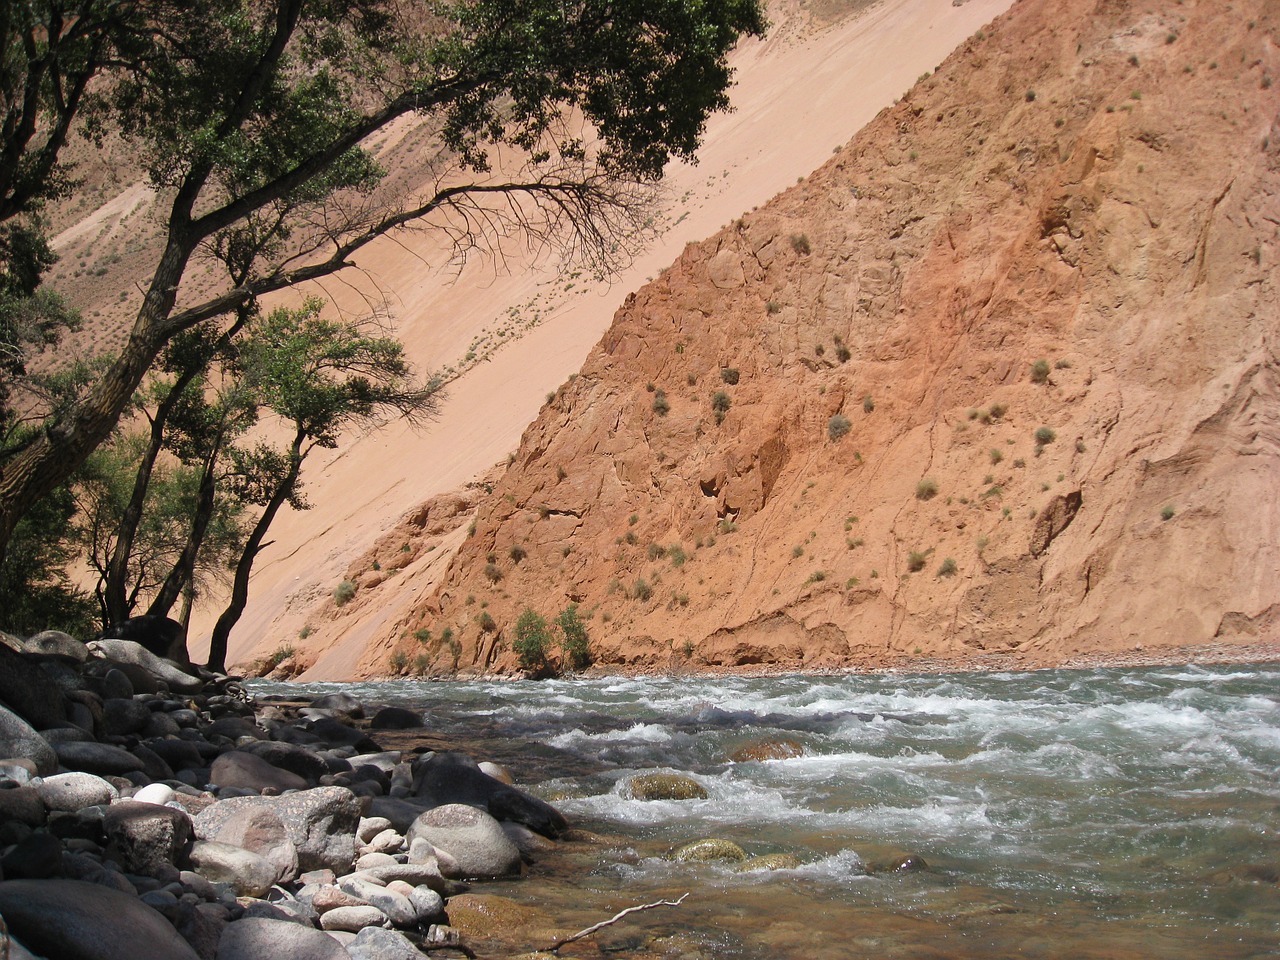 kyrgyzstan torrent river free photo